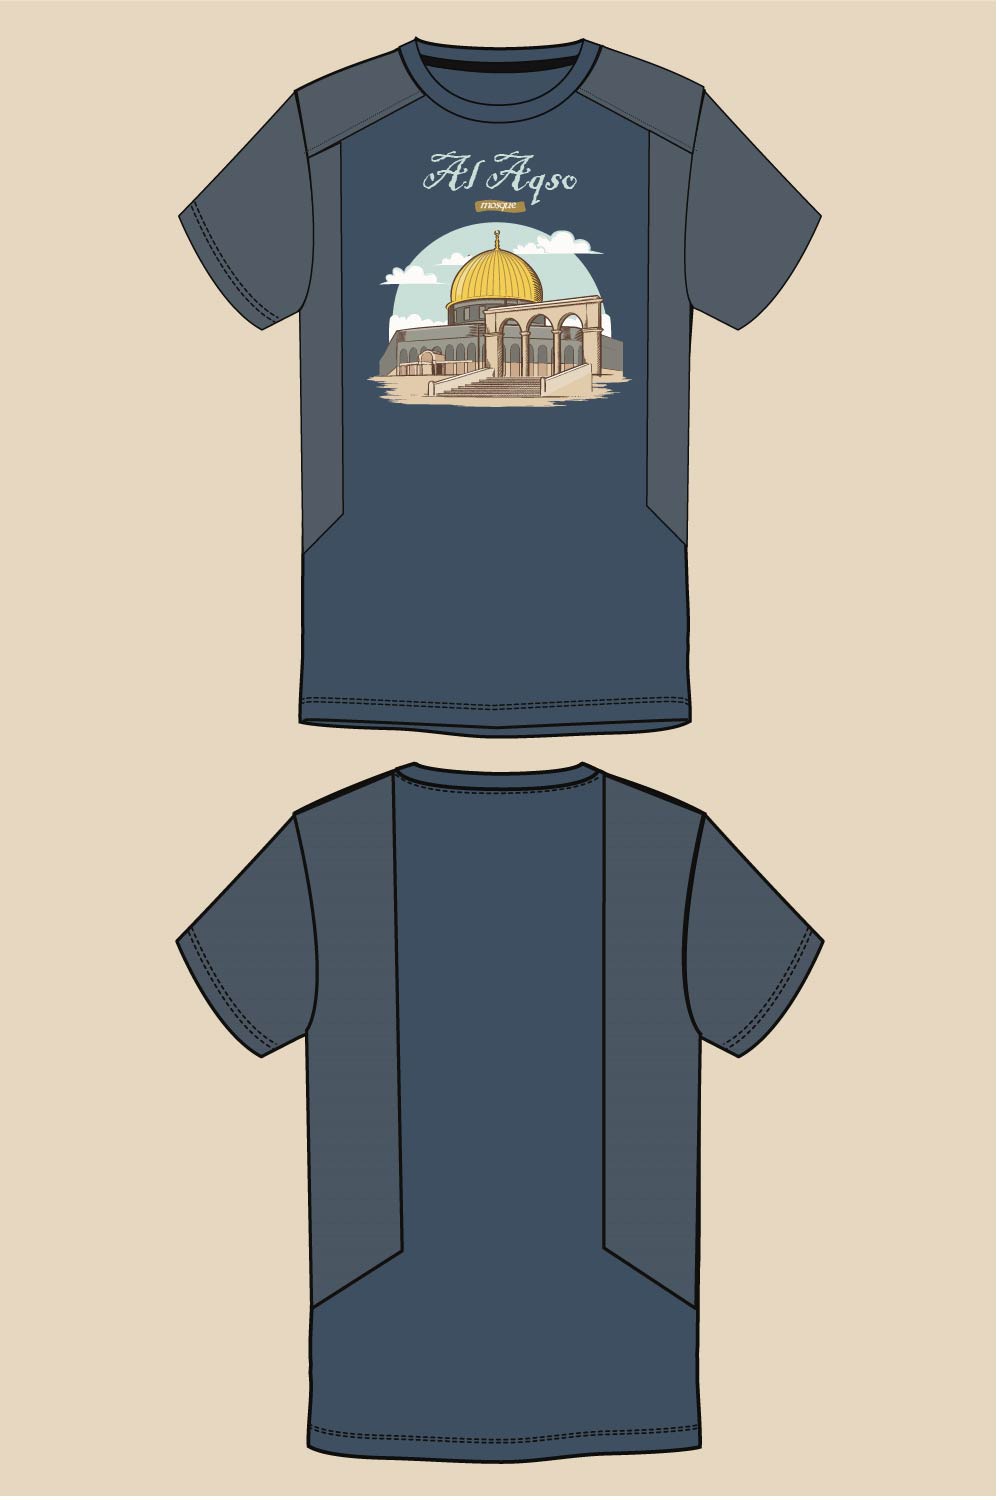 Jersy T-shirt (Al Aqso) pinterest preview image.